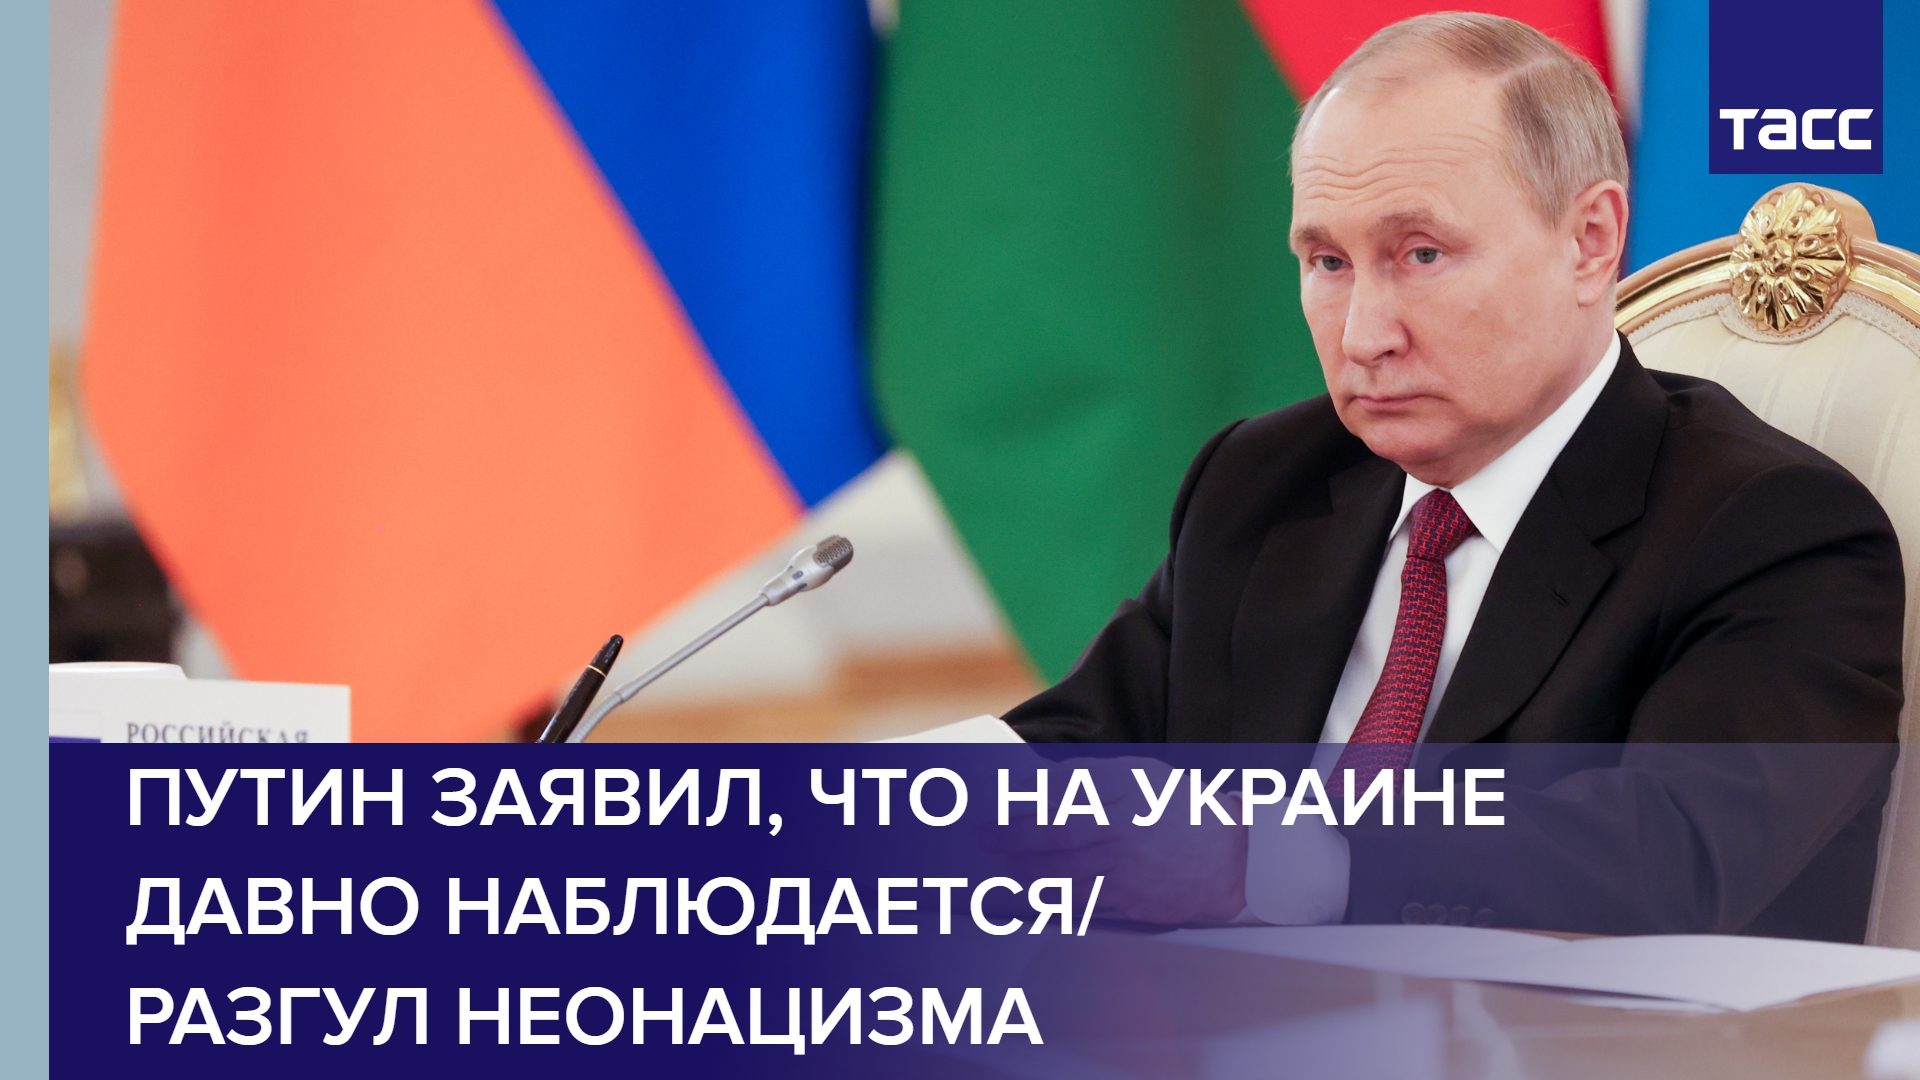 Путин заявил, что на Украине давно наблюдается разгул неонацизма